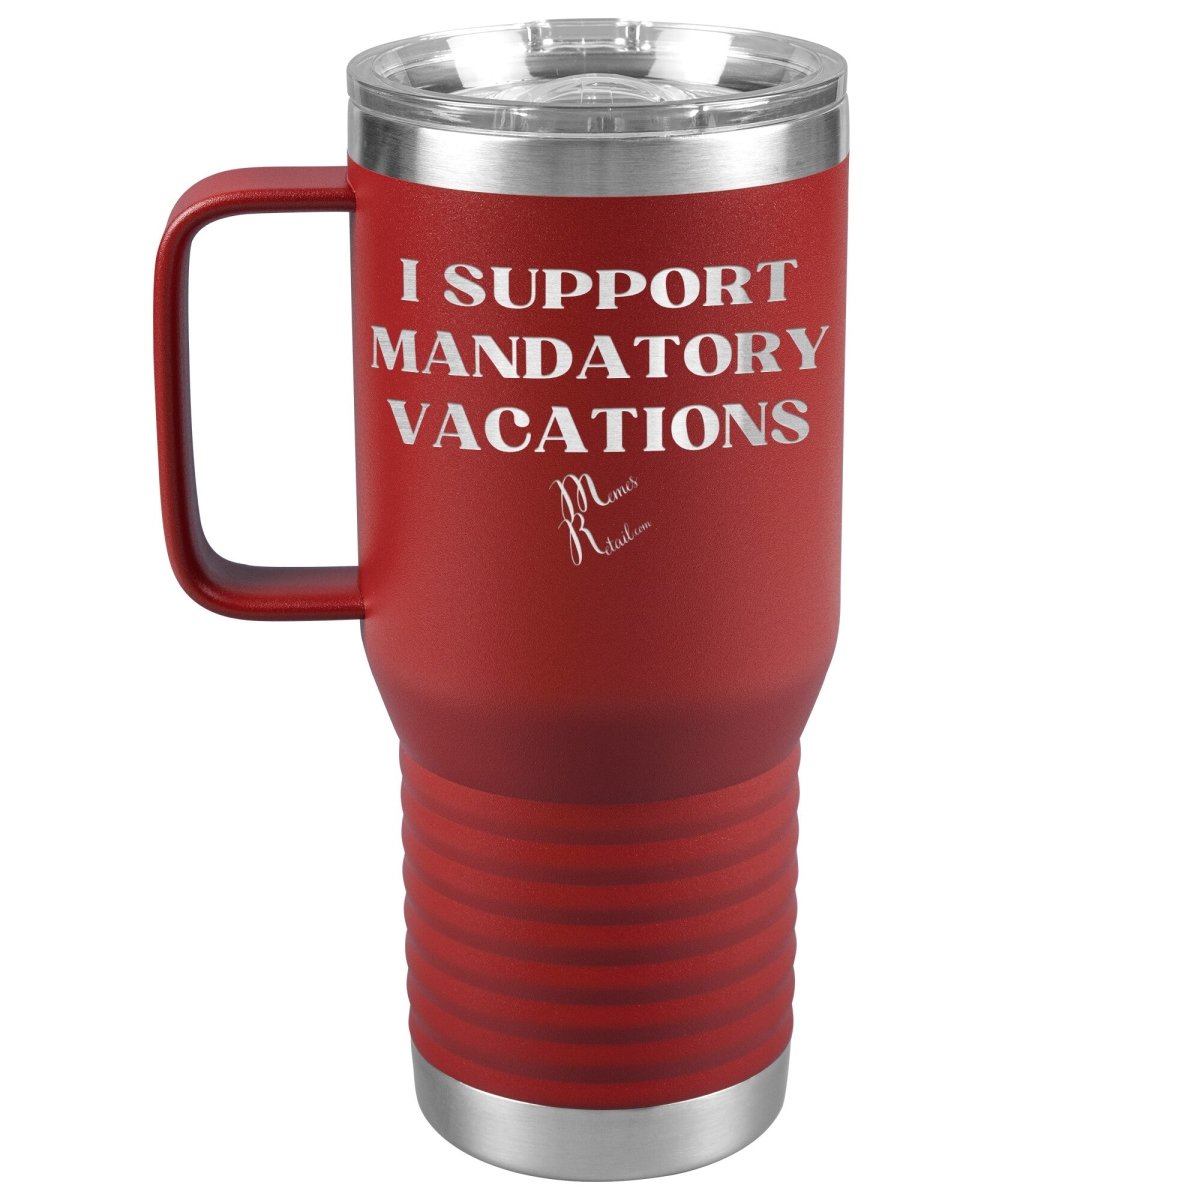 I support mandatory vacations Tumblers, 20oz Travel Tumbler / Red - MemesRetail.com